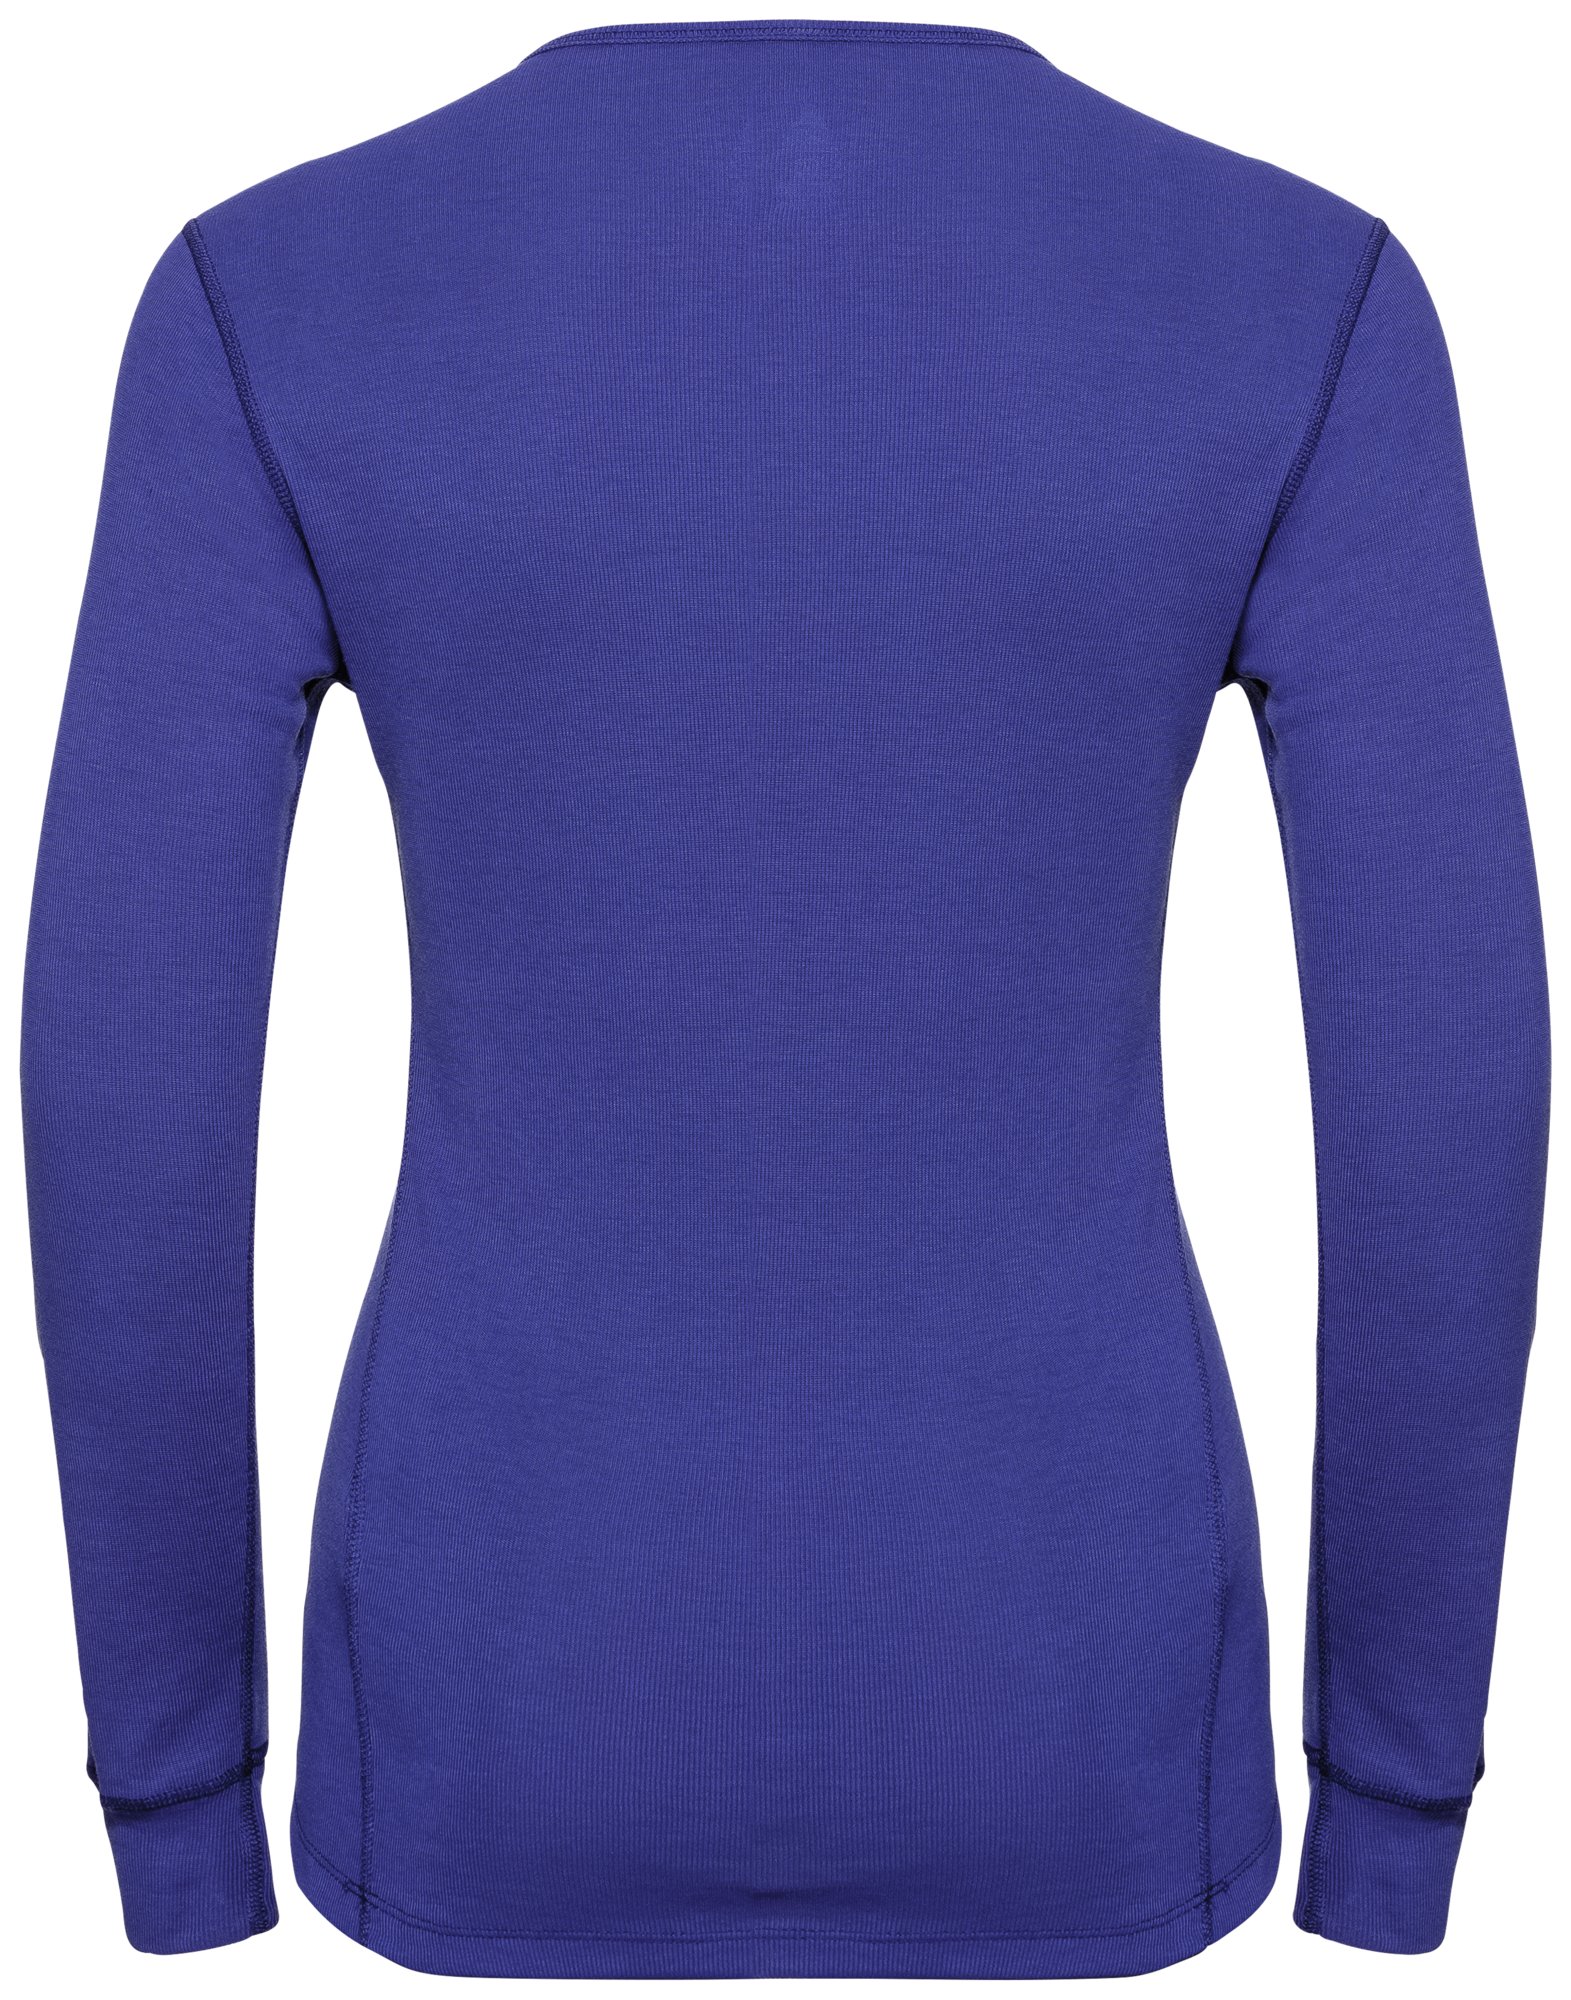 Odlo ACTIVE WARM Damen Funktionsunterwäsche Langarm-Shirt - blau